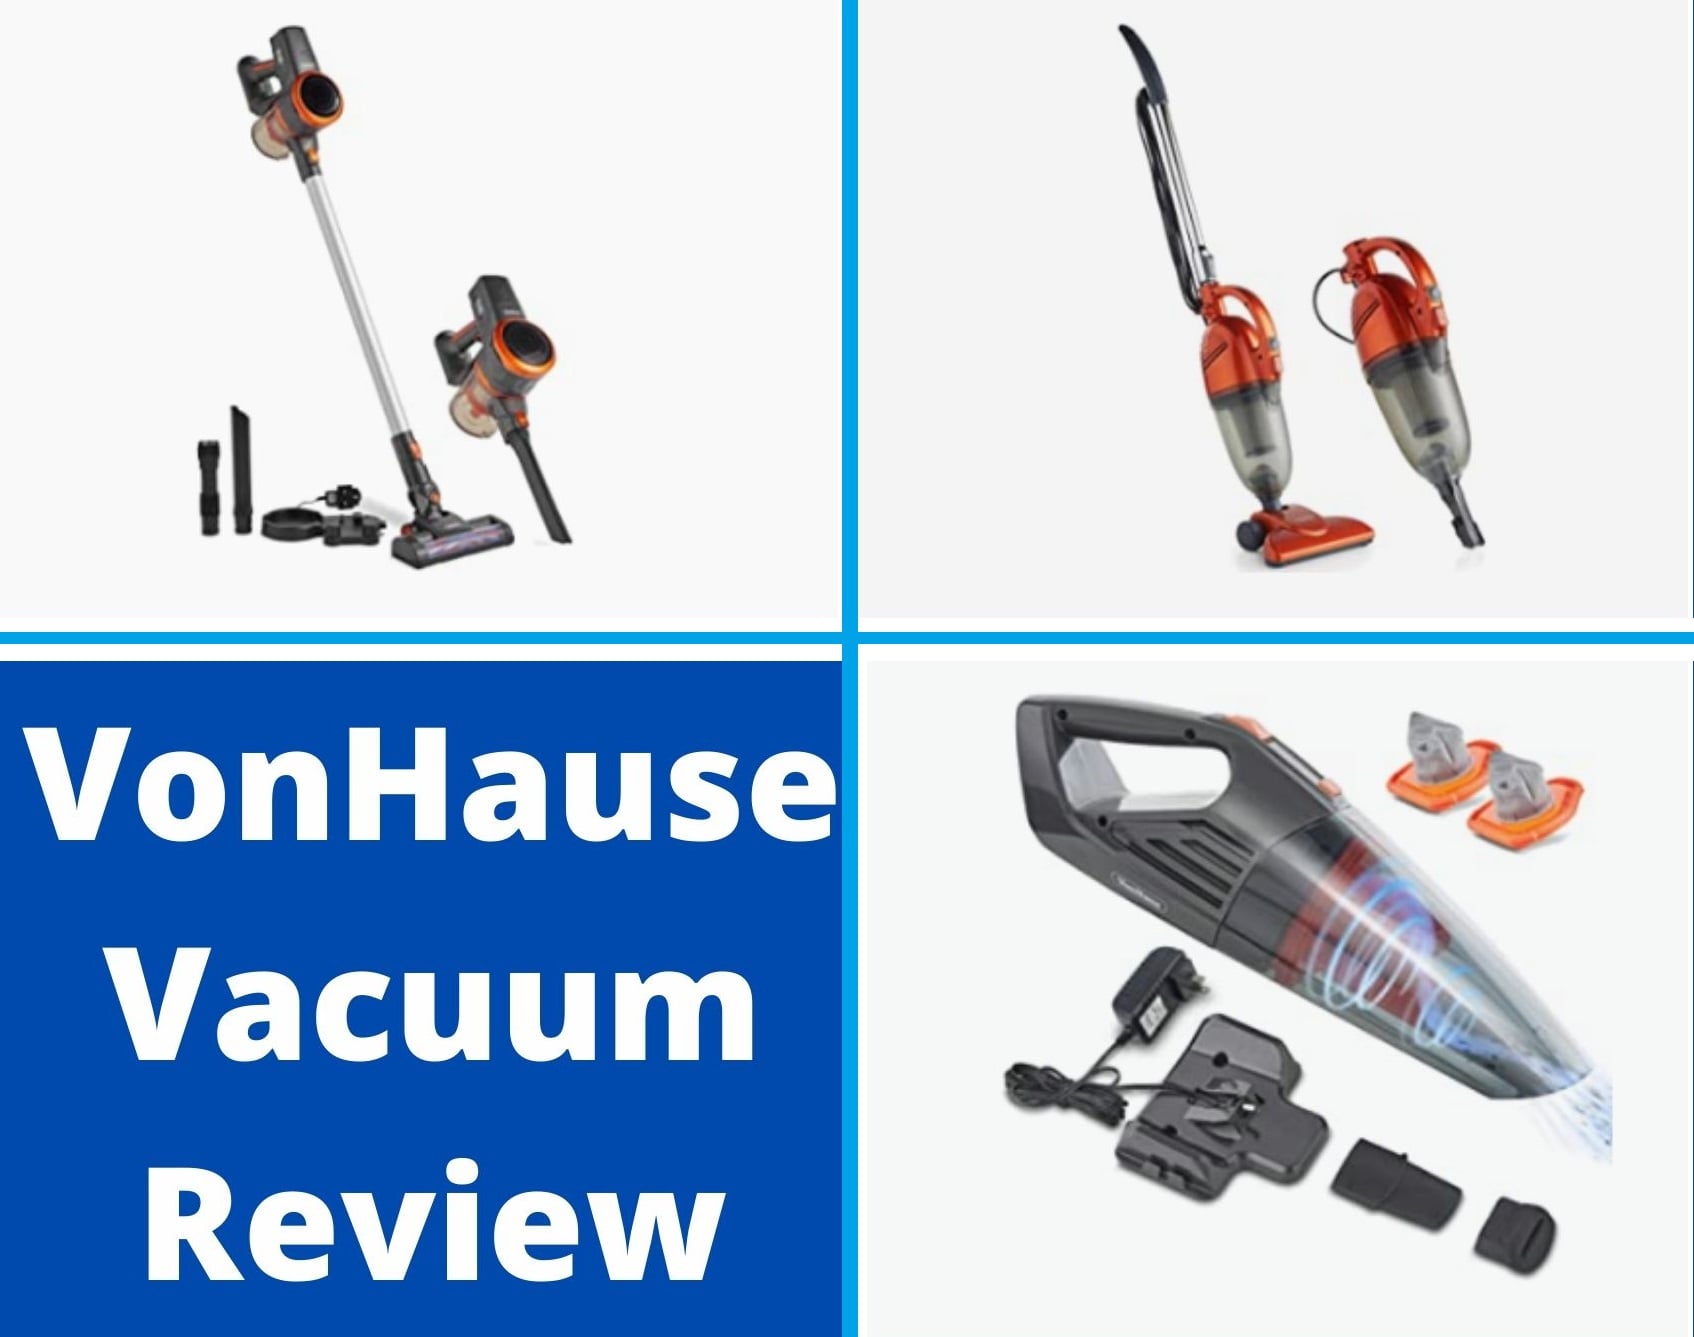 Vonhause Vacuums